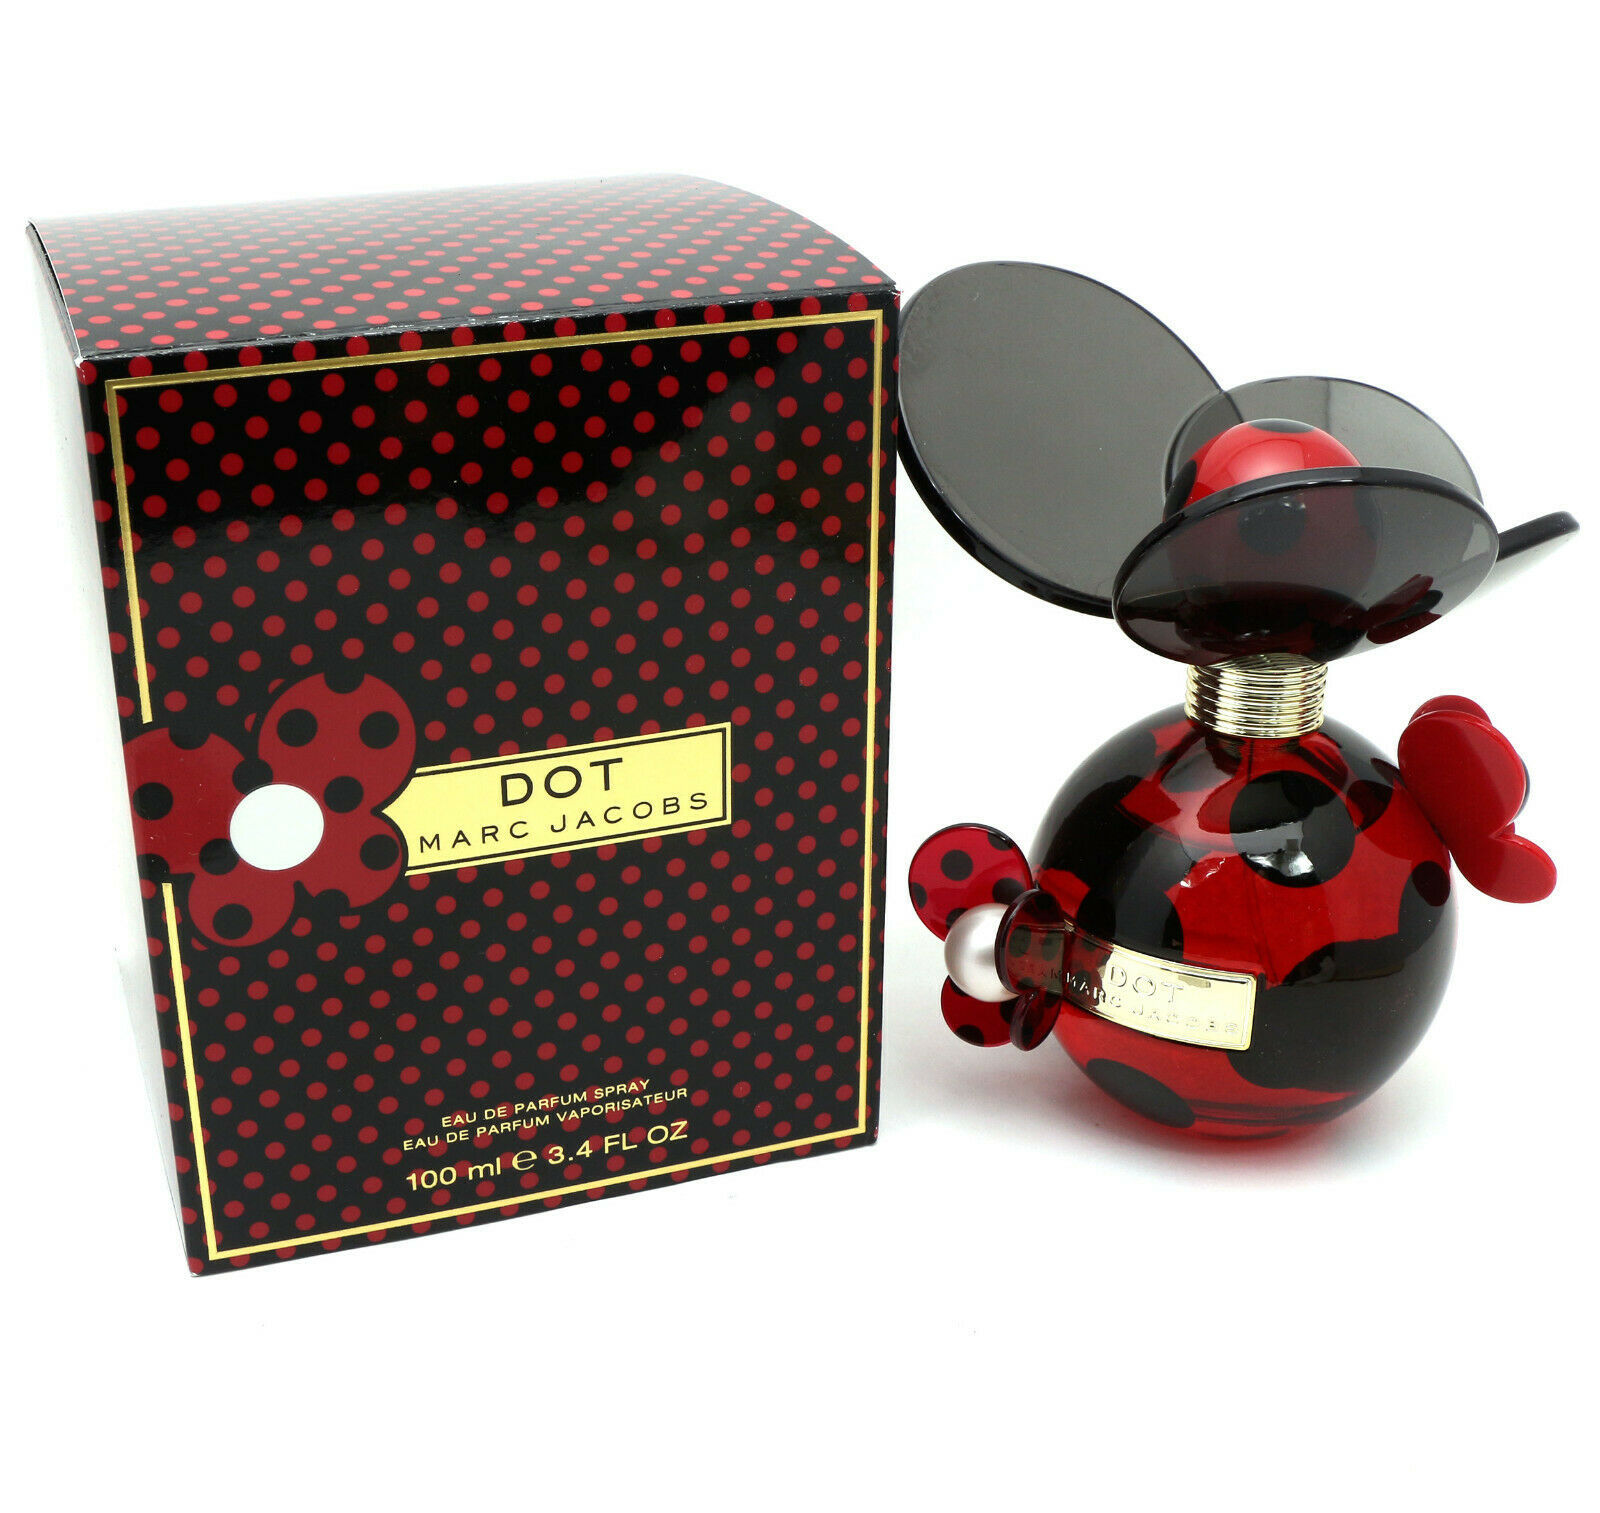 Marc Jacobs Dot for Women Eau De Parfum Spray 3.4 Oz / 100 ml New in ...